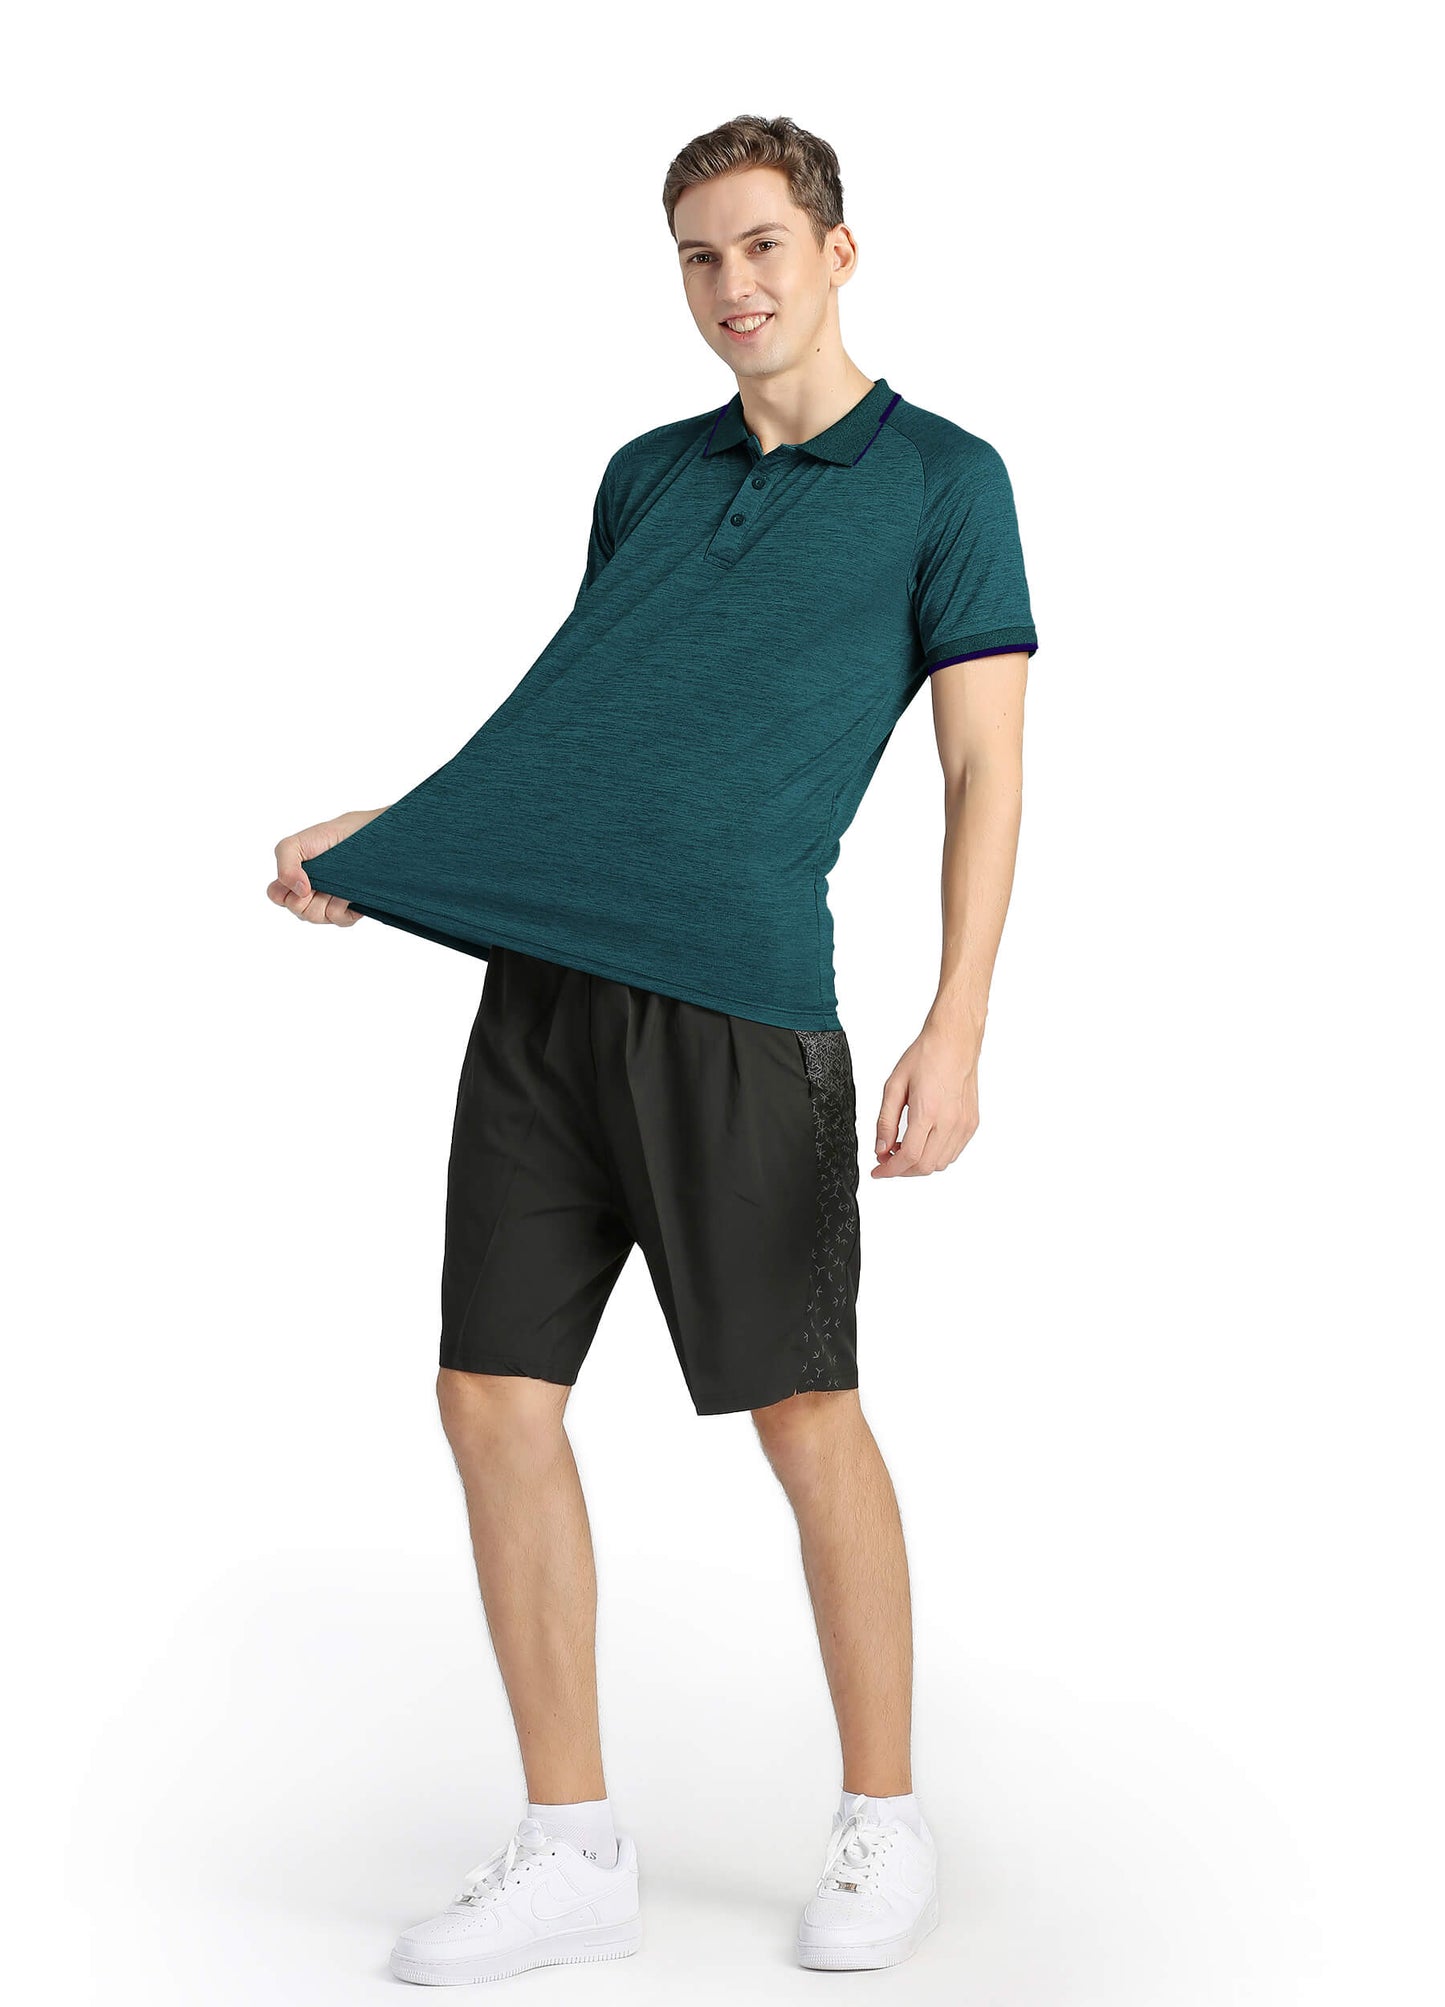 4POSE Men's Dark Green Summer Sportswear Stretch Short Sleeve Polo Shirt